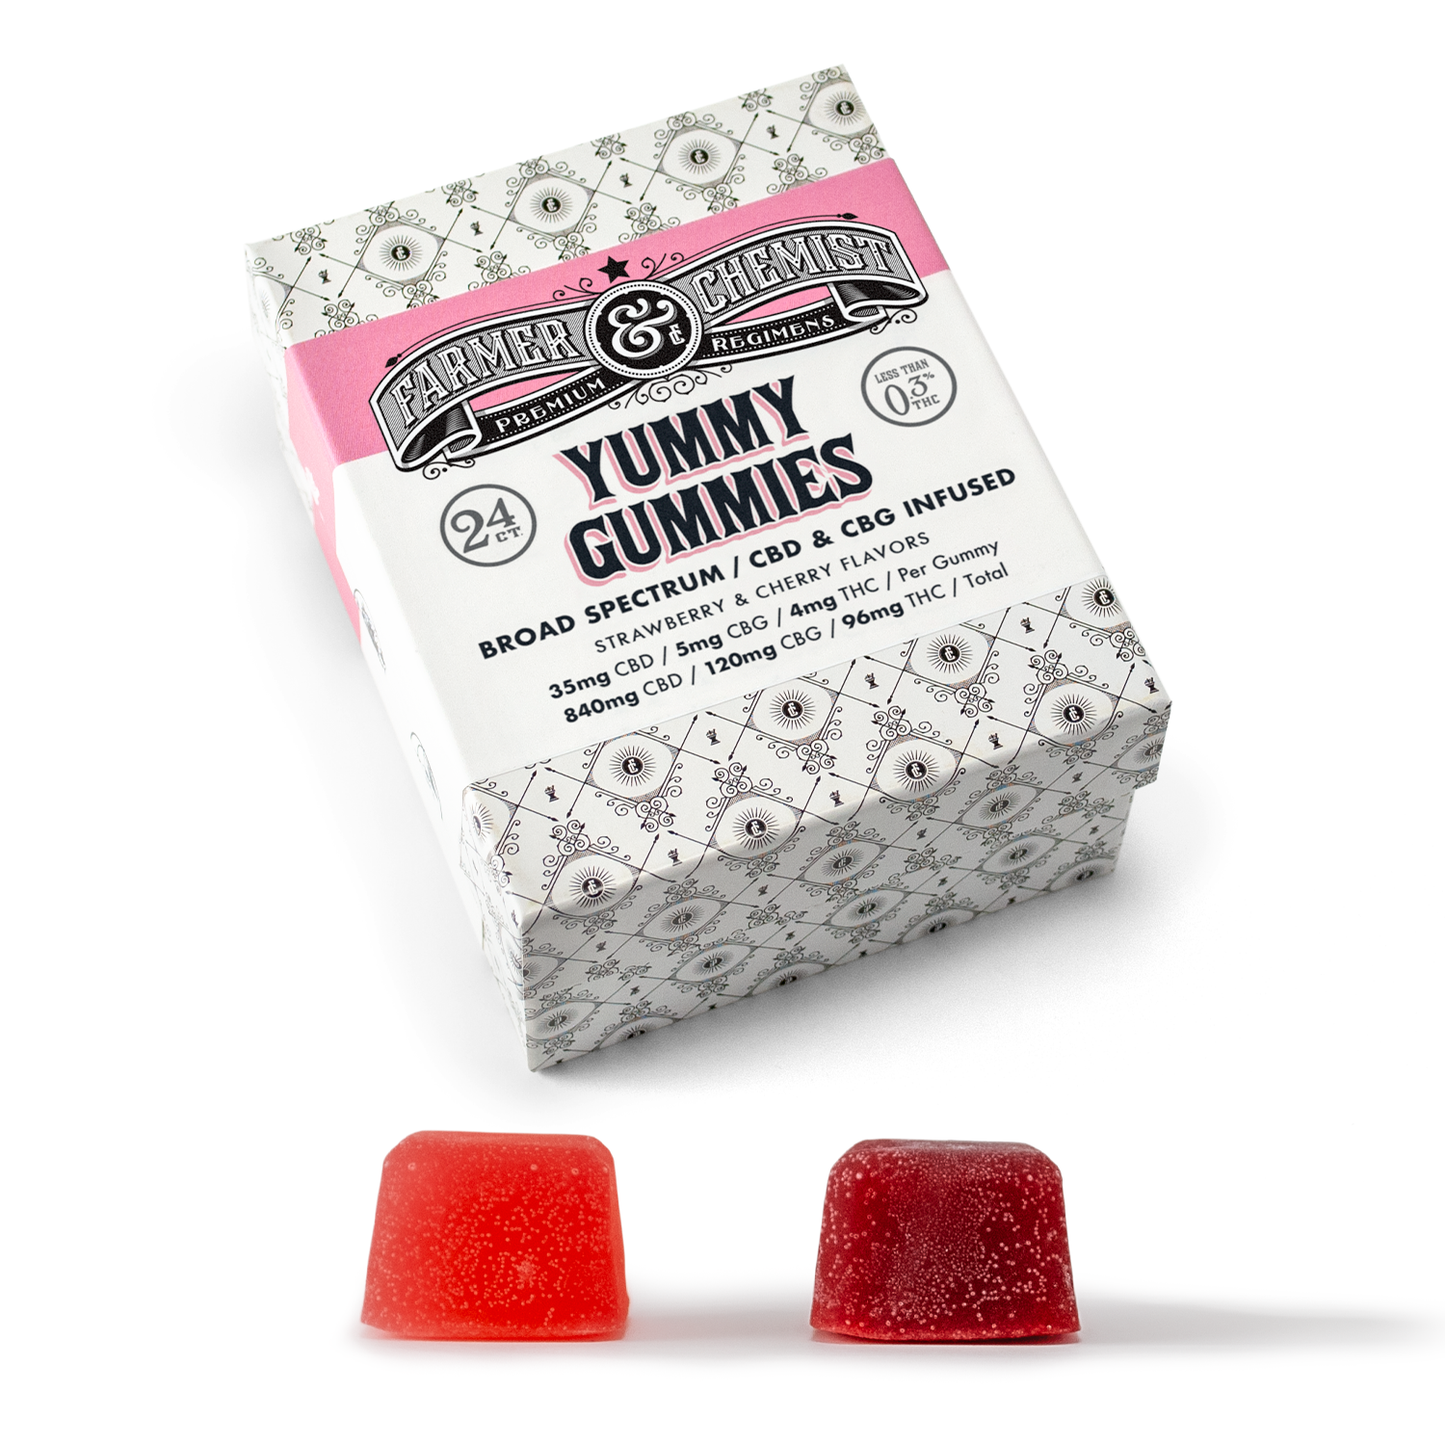 YUMMY GUMMIES - 24ct 35mg CBD / 5mg CBG Gummies (Case pack of 4)